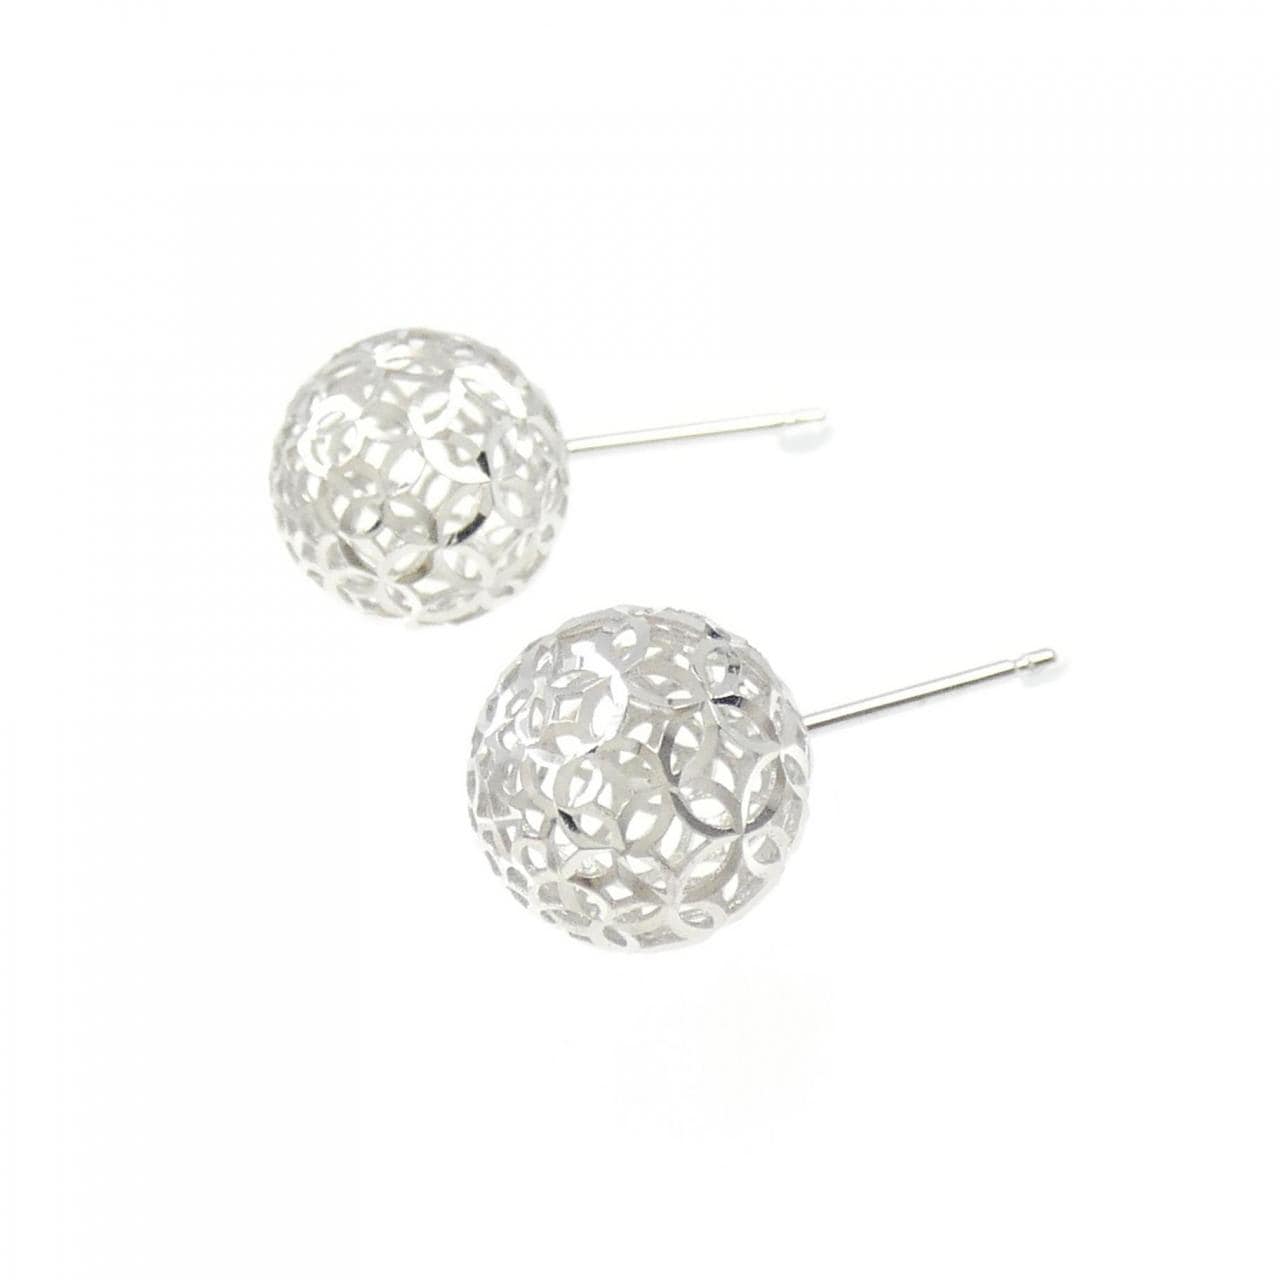 [BRAND NEW] K18WG earrings